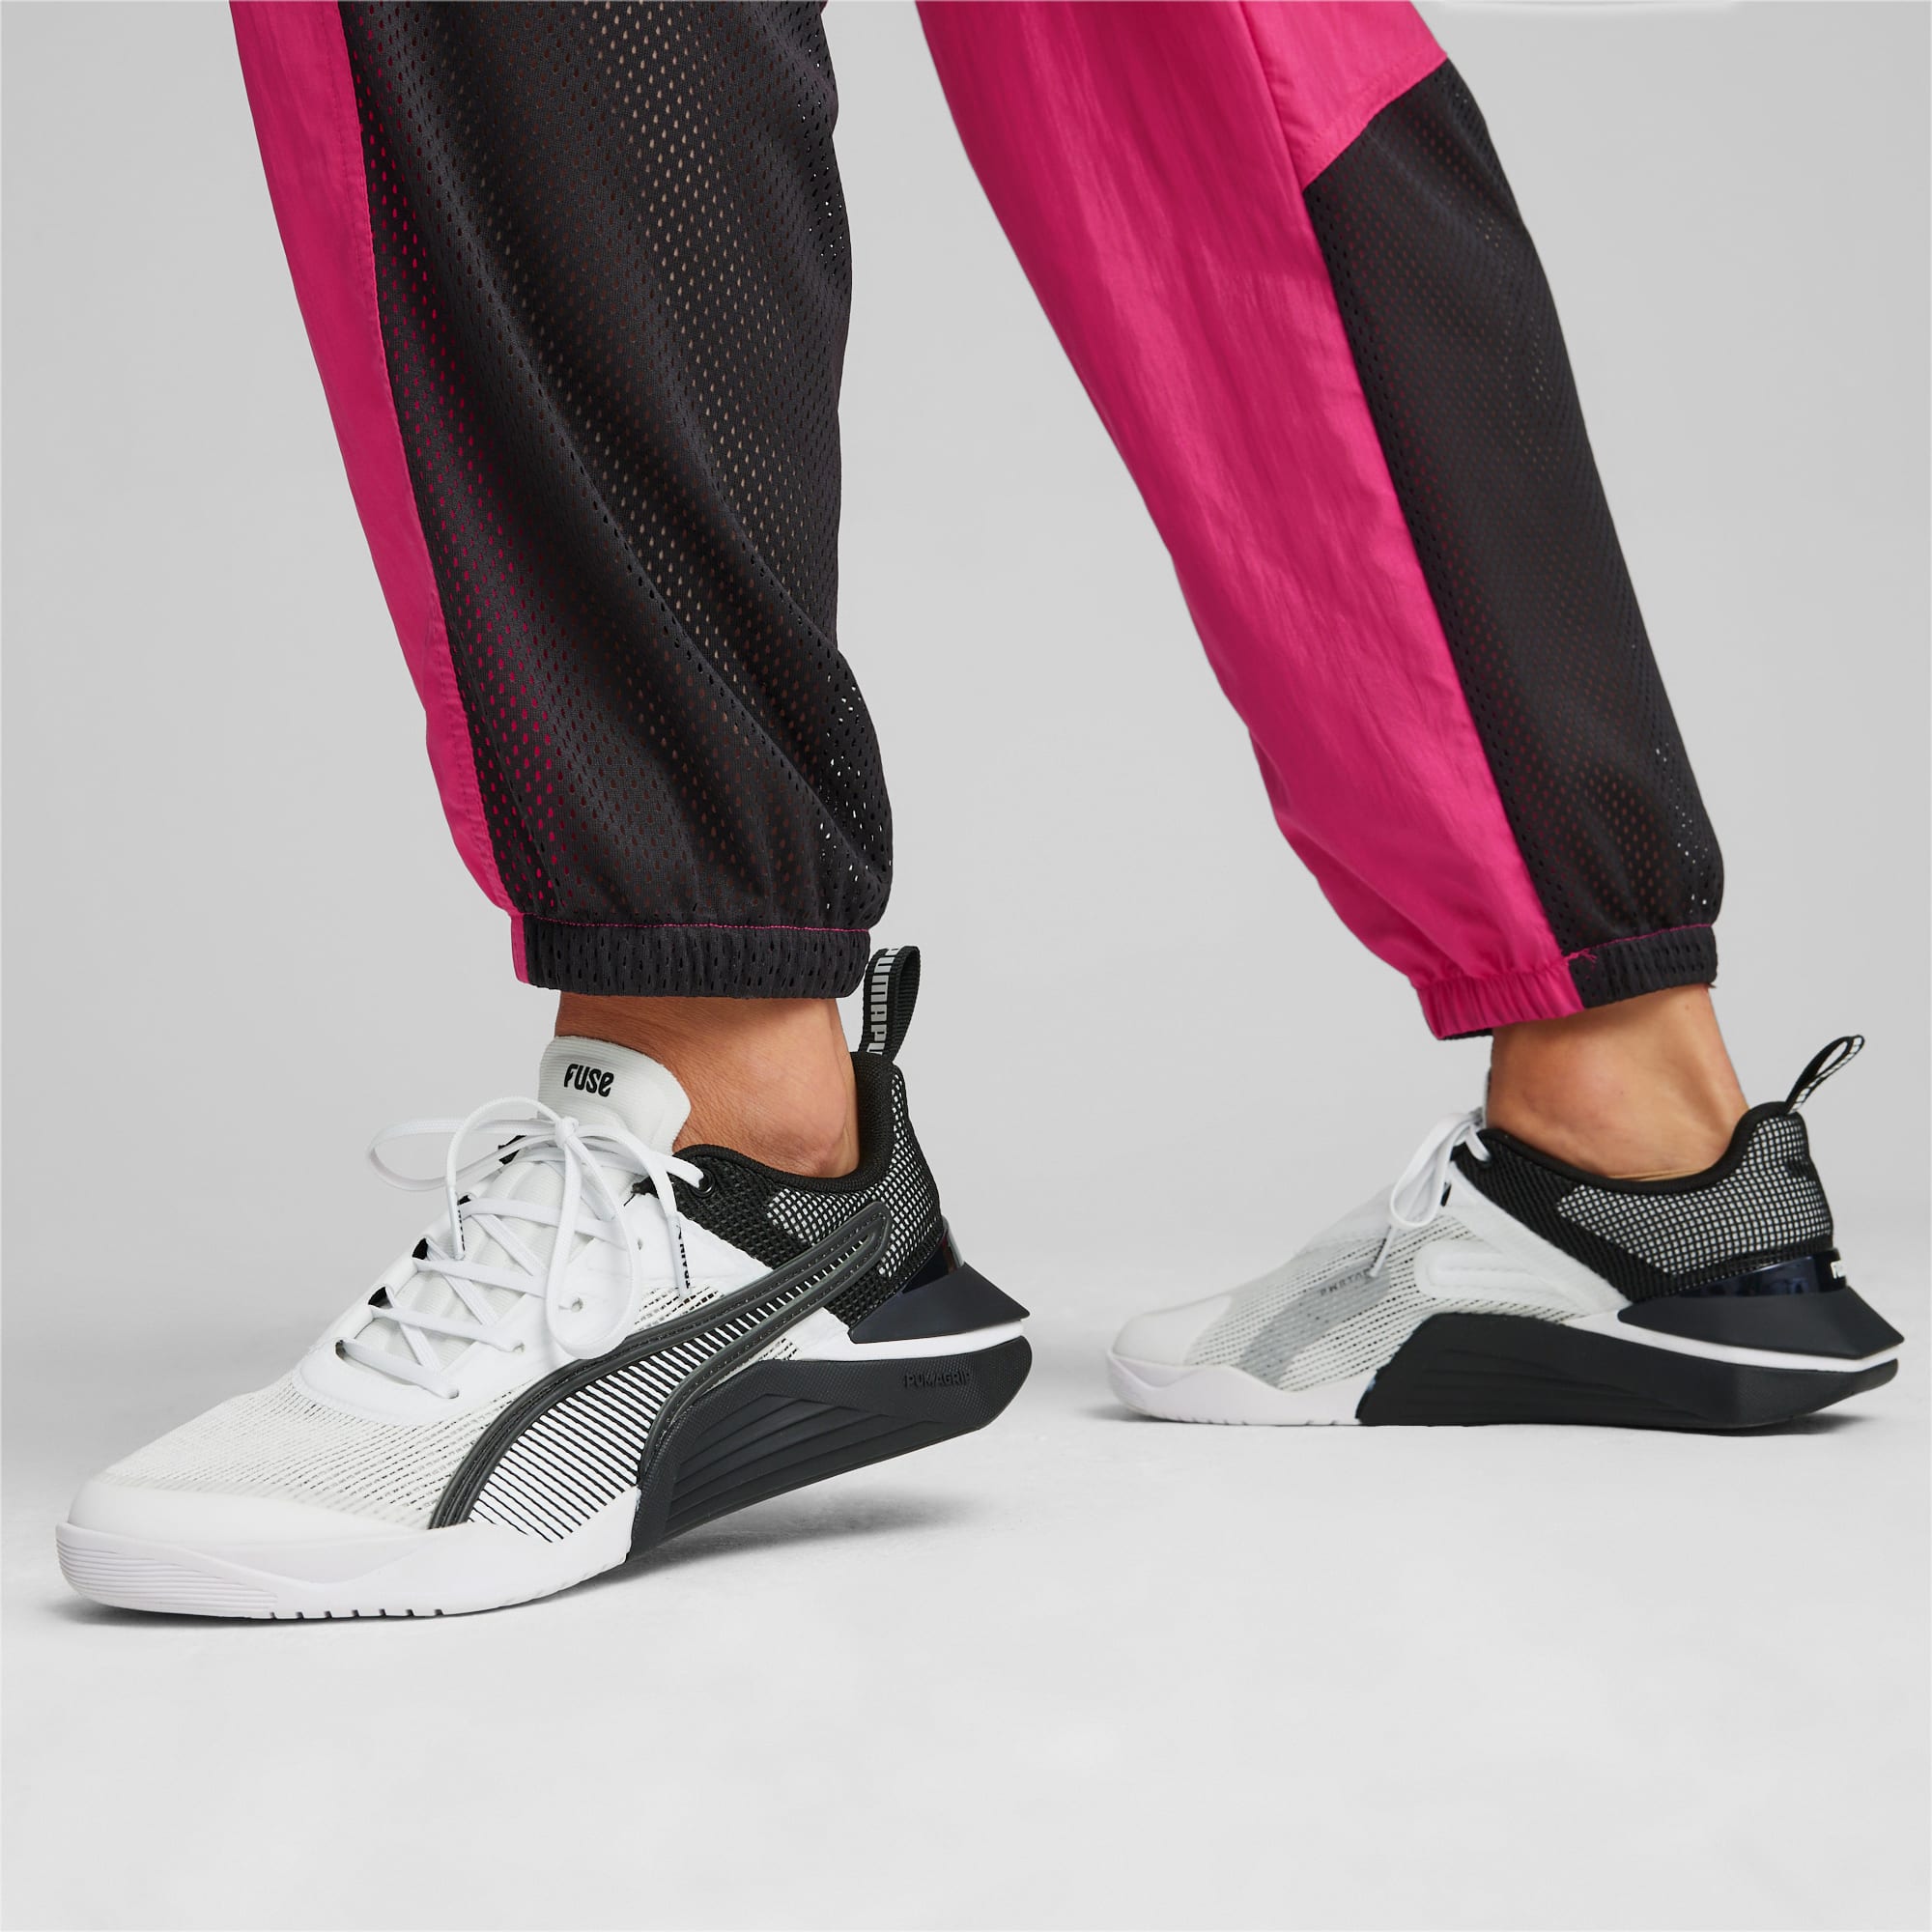 PUMA Fuse 3.0 Women's Training Shoes, White/Black, Size 35,5, Shoes